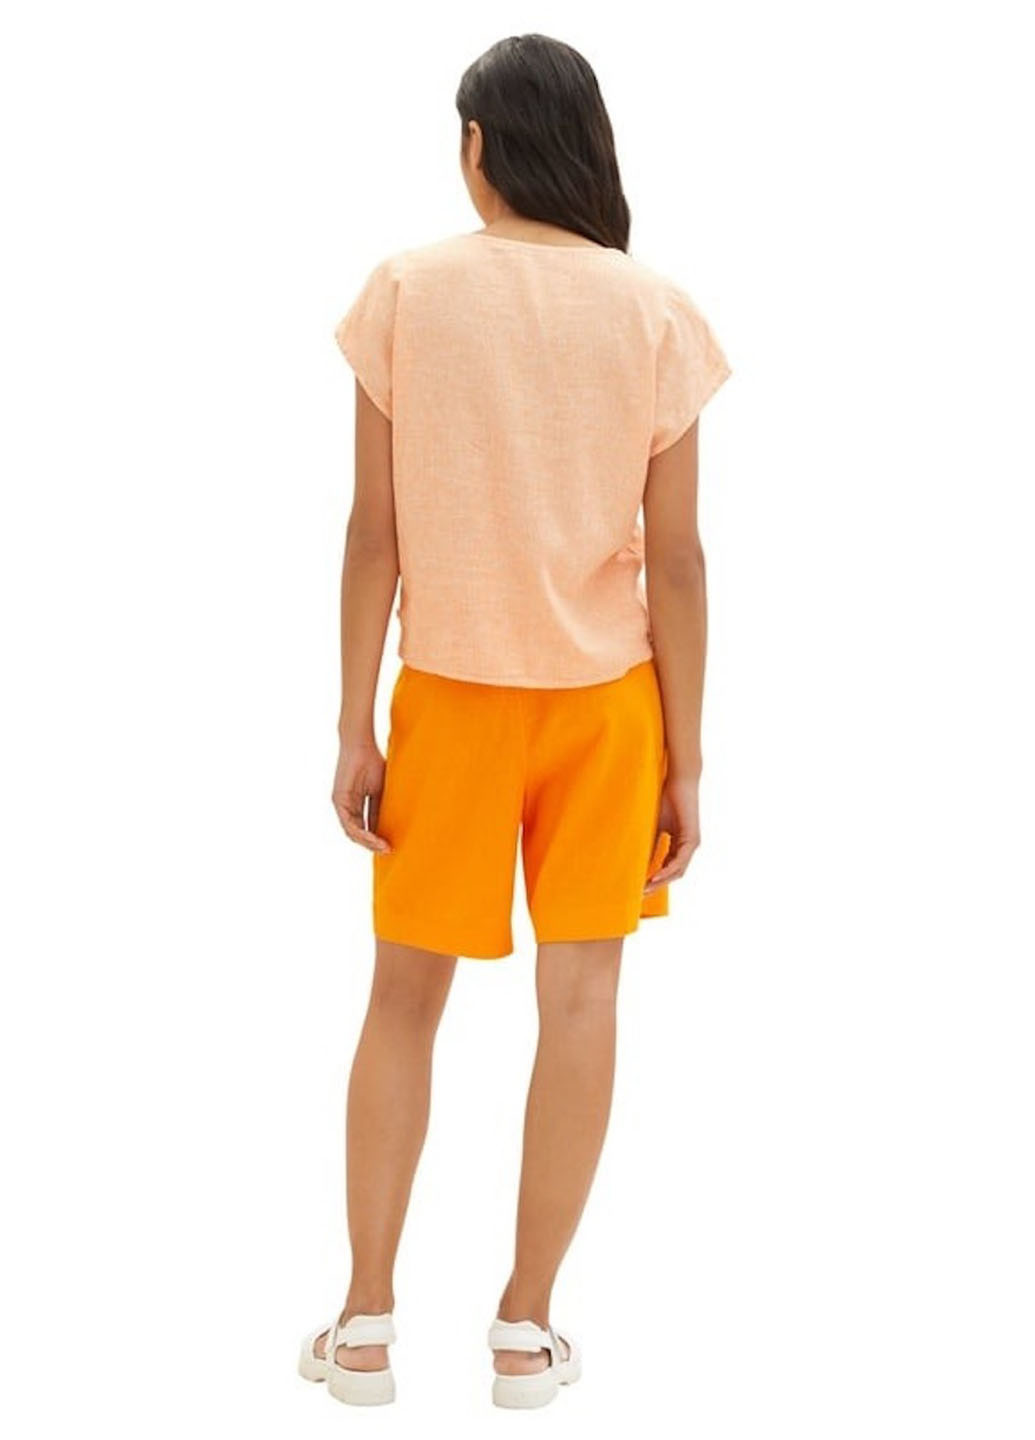 Оранжевая блуза Tom Tailor